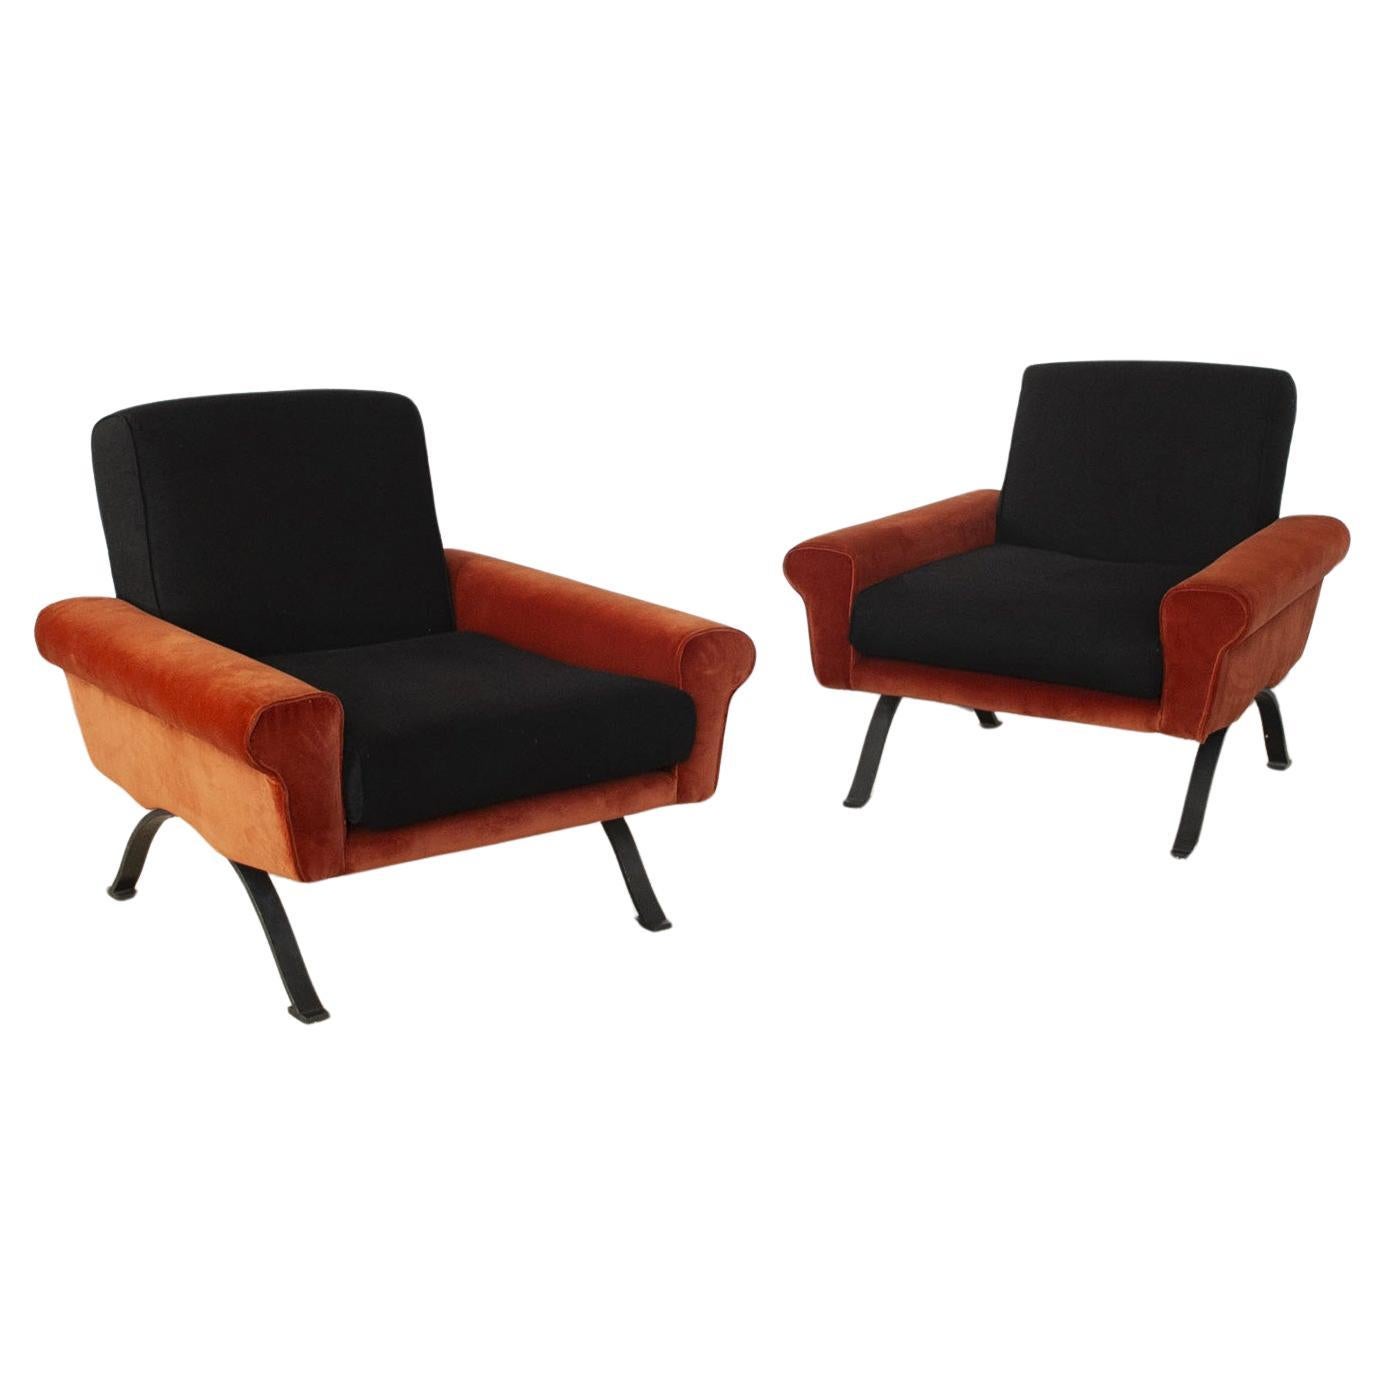 Sergio Saporiti armchairs 1960s. For Sale